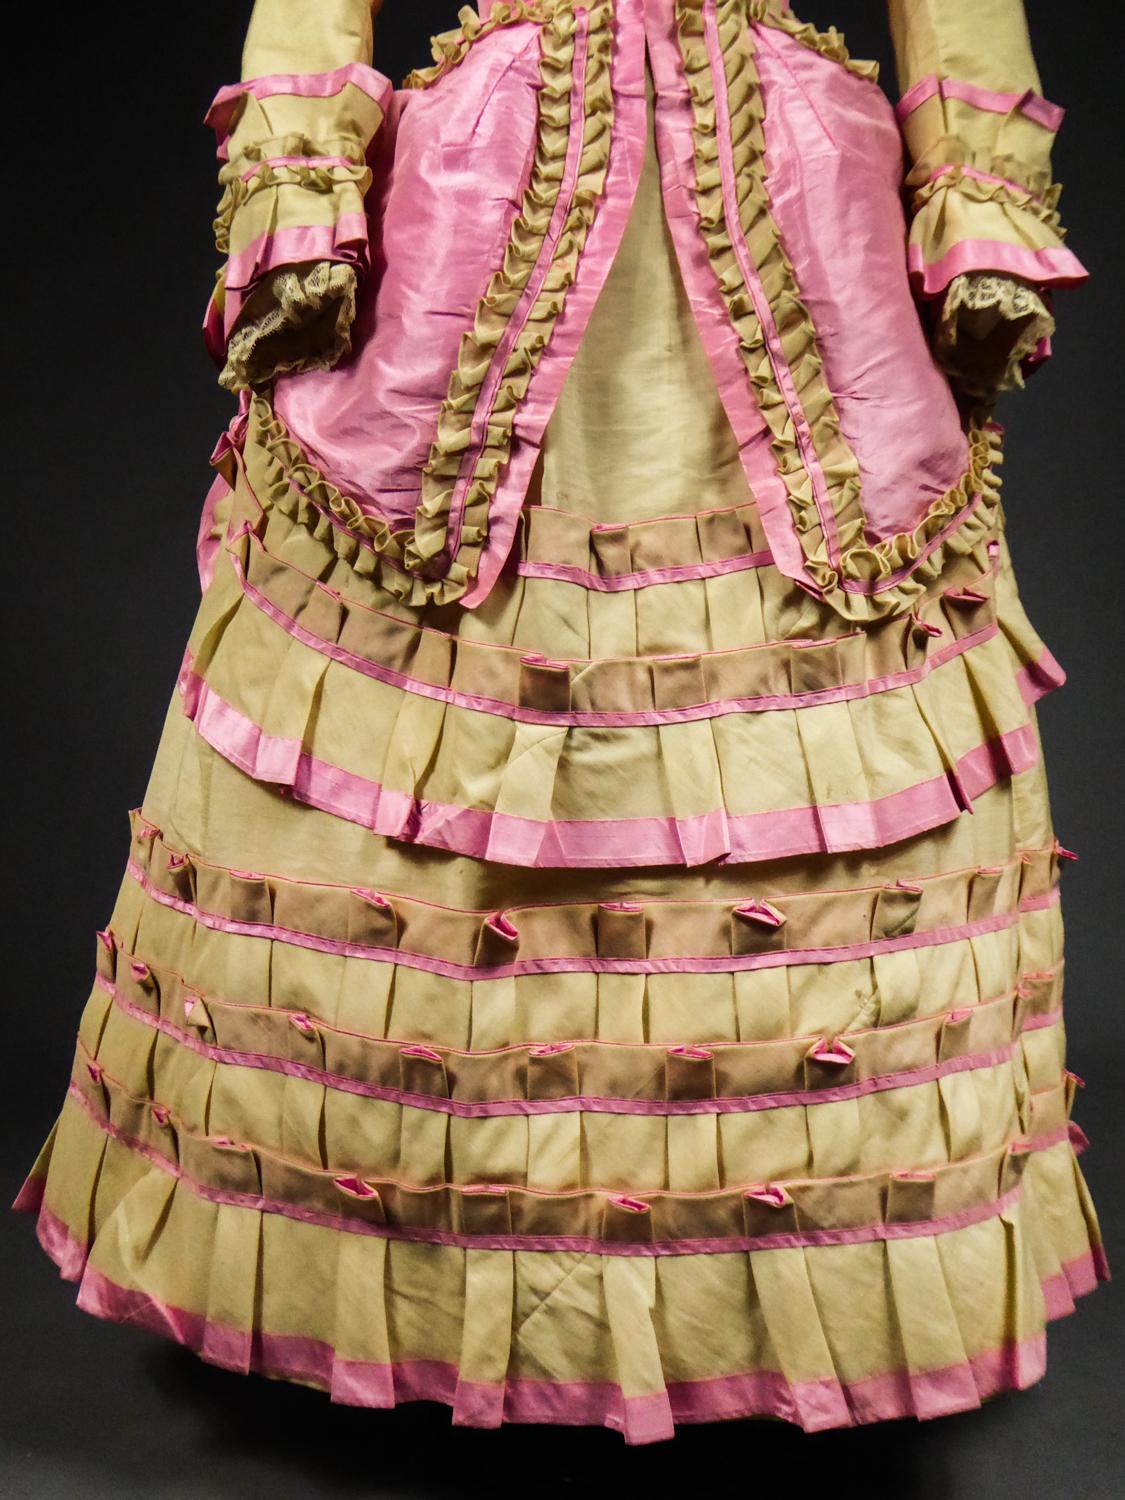 Women's A Challis and Taffeta Bustle Cage Fashion Dress - France circa 1880